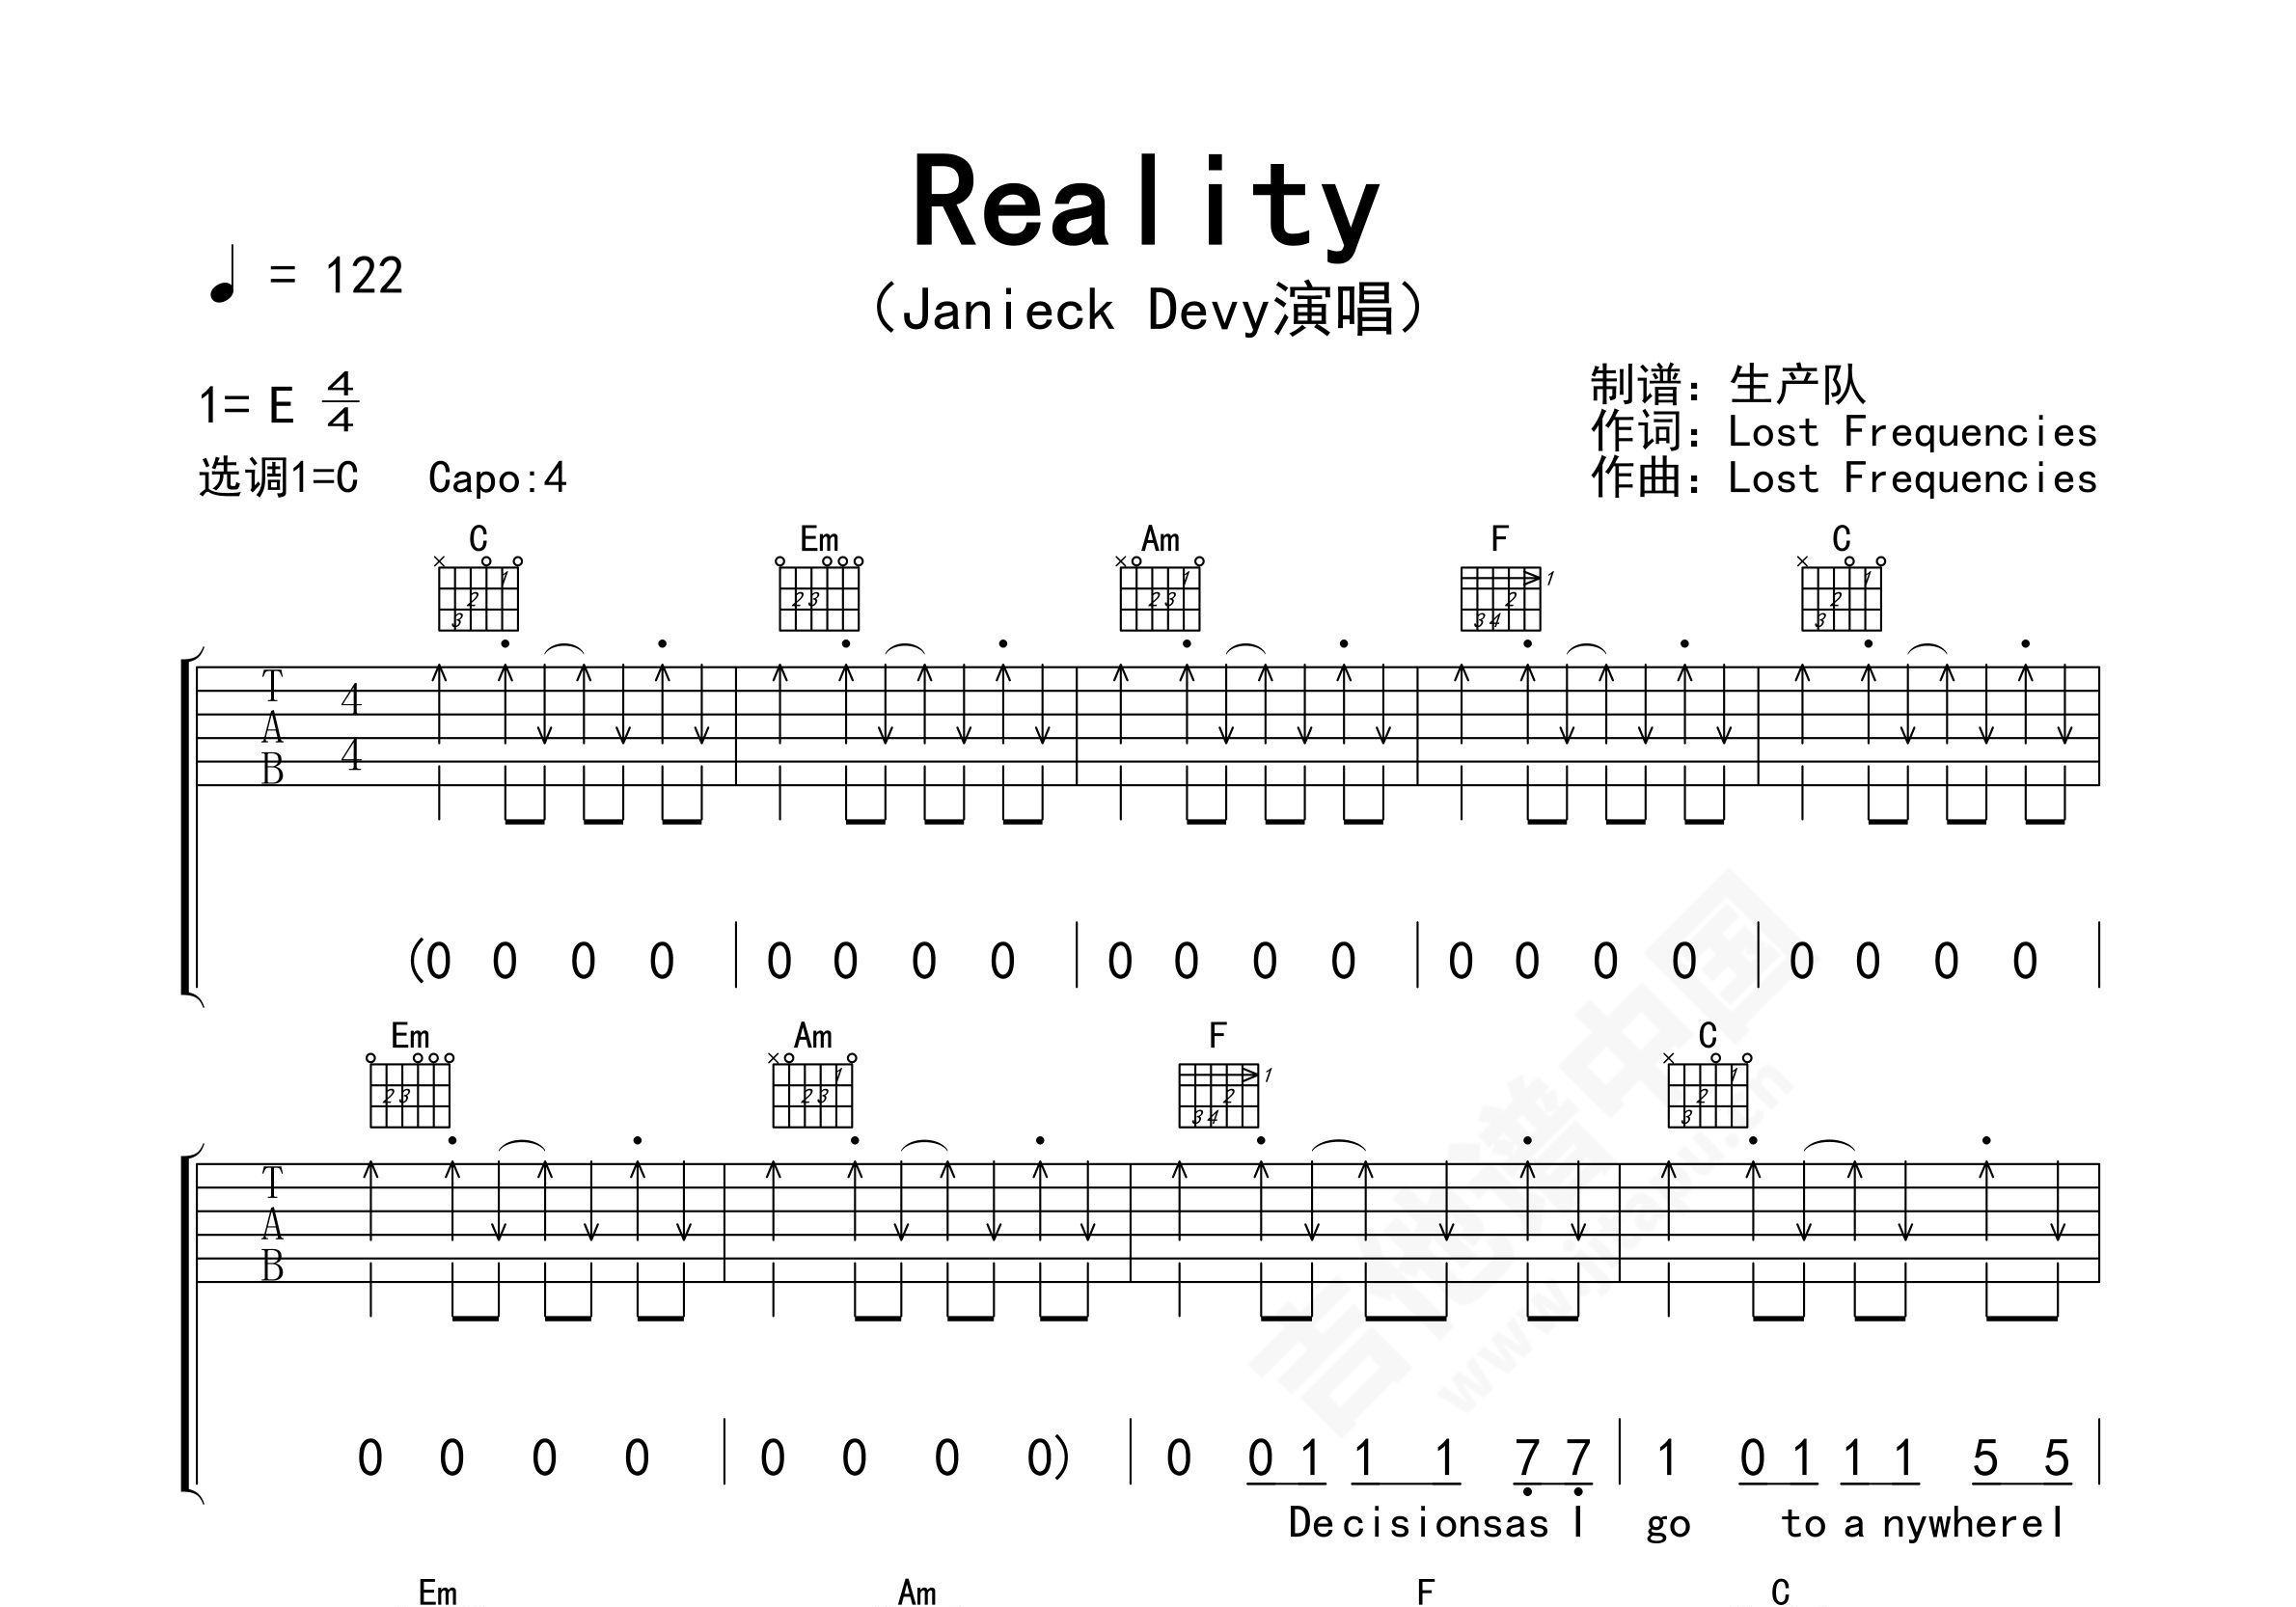 yourreality吉他谱,aty吉他,aty吉他_大山谷图库